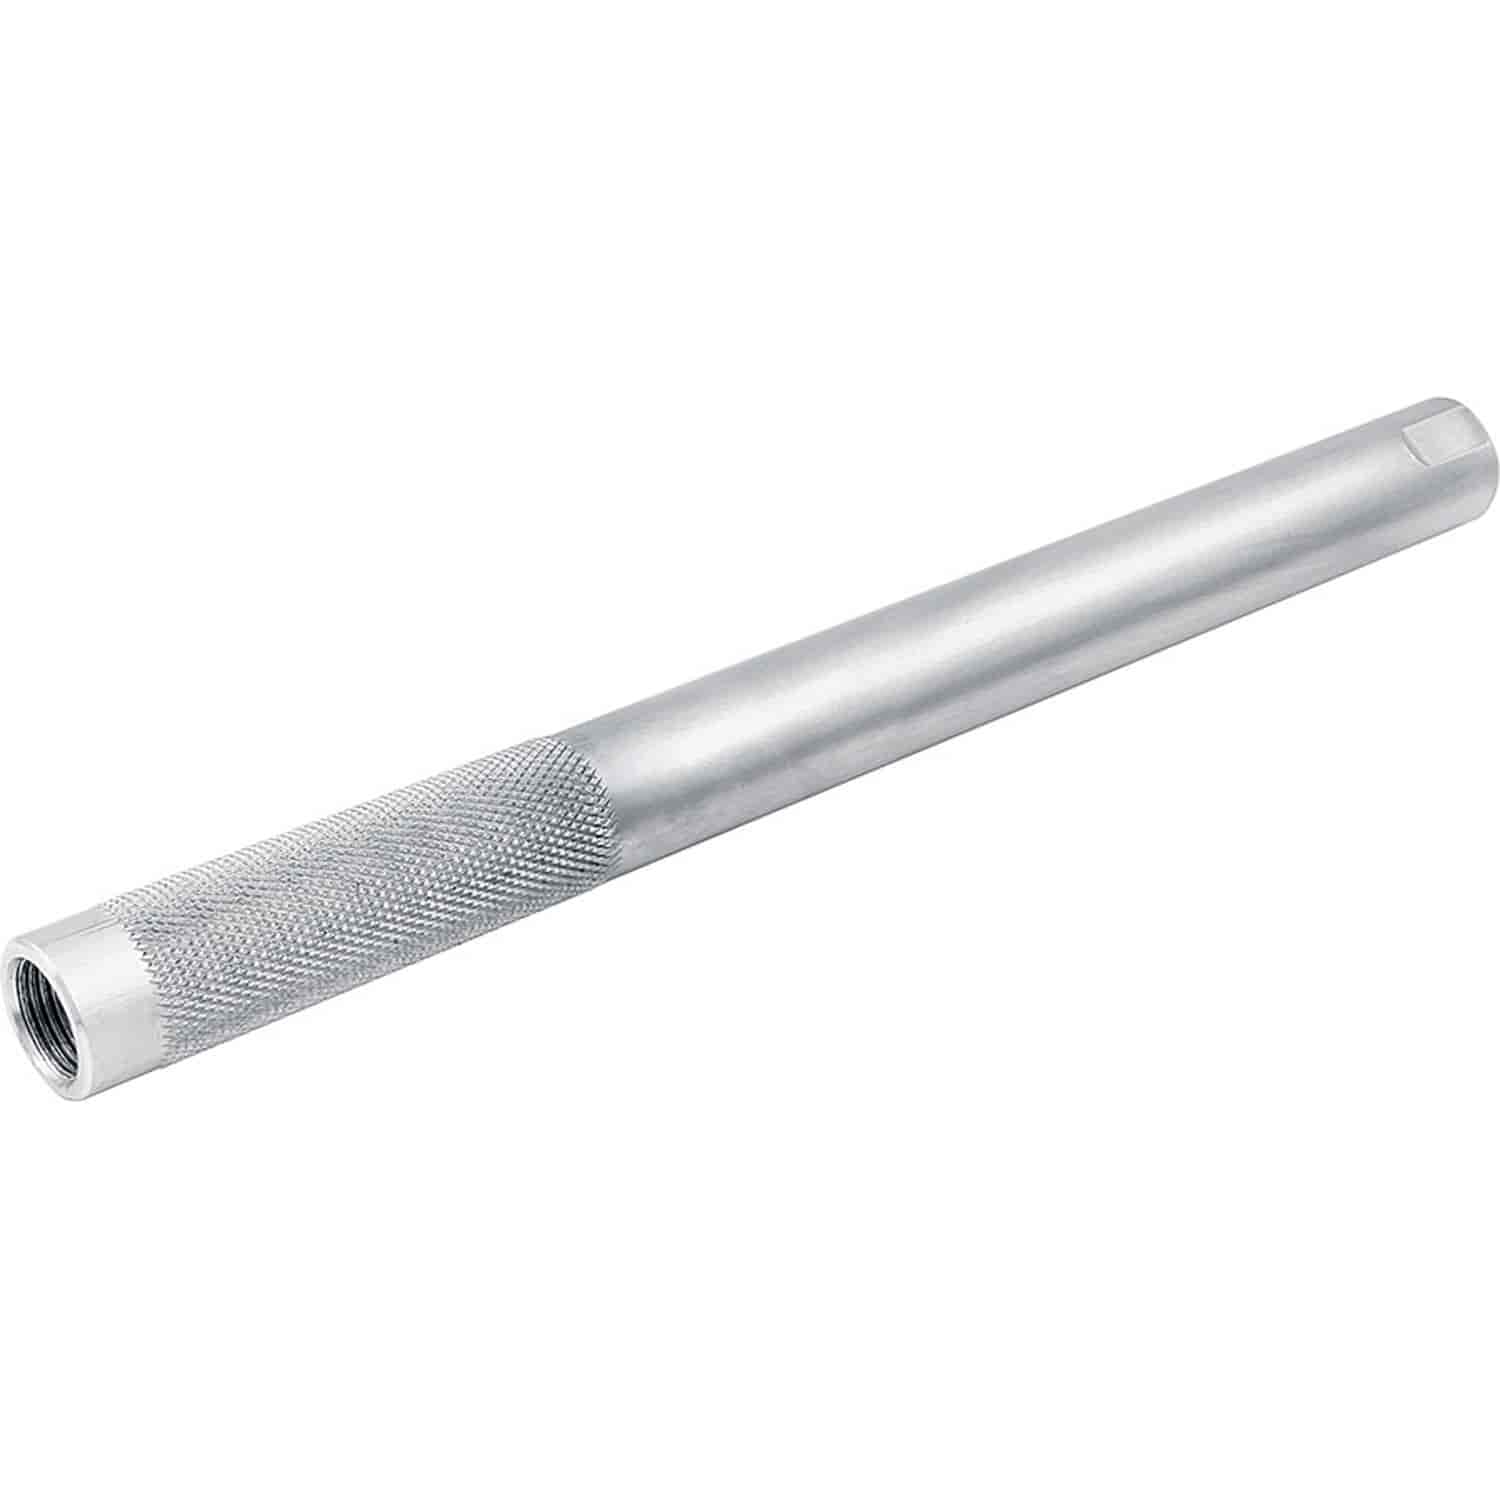 Swedged Aluminum Tie Rod Tube Length: 19